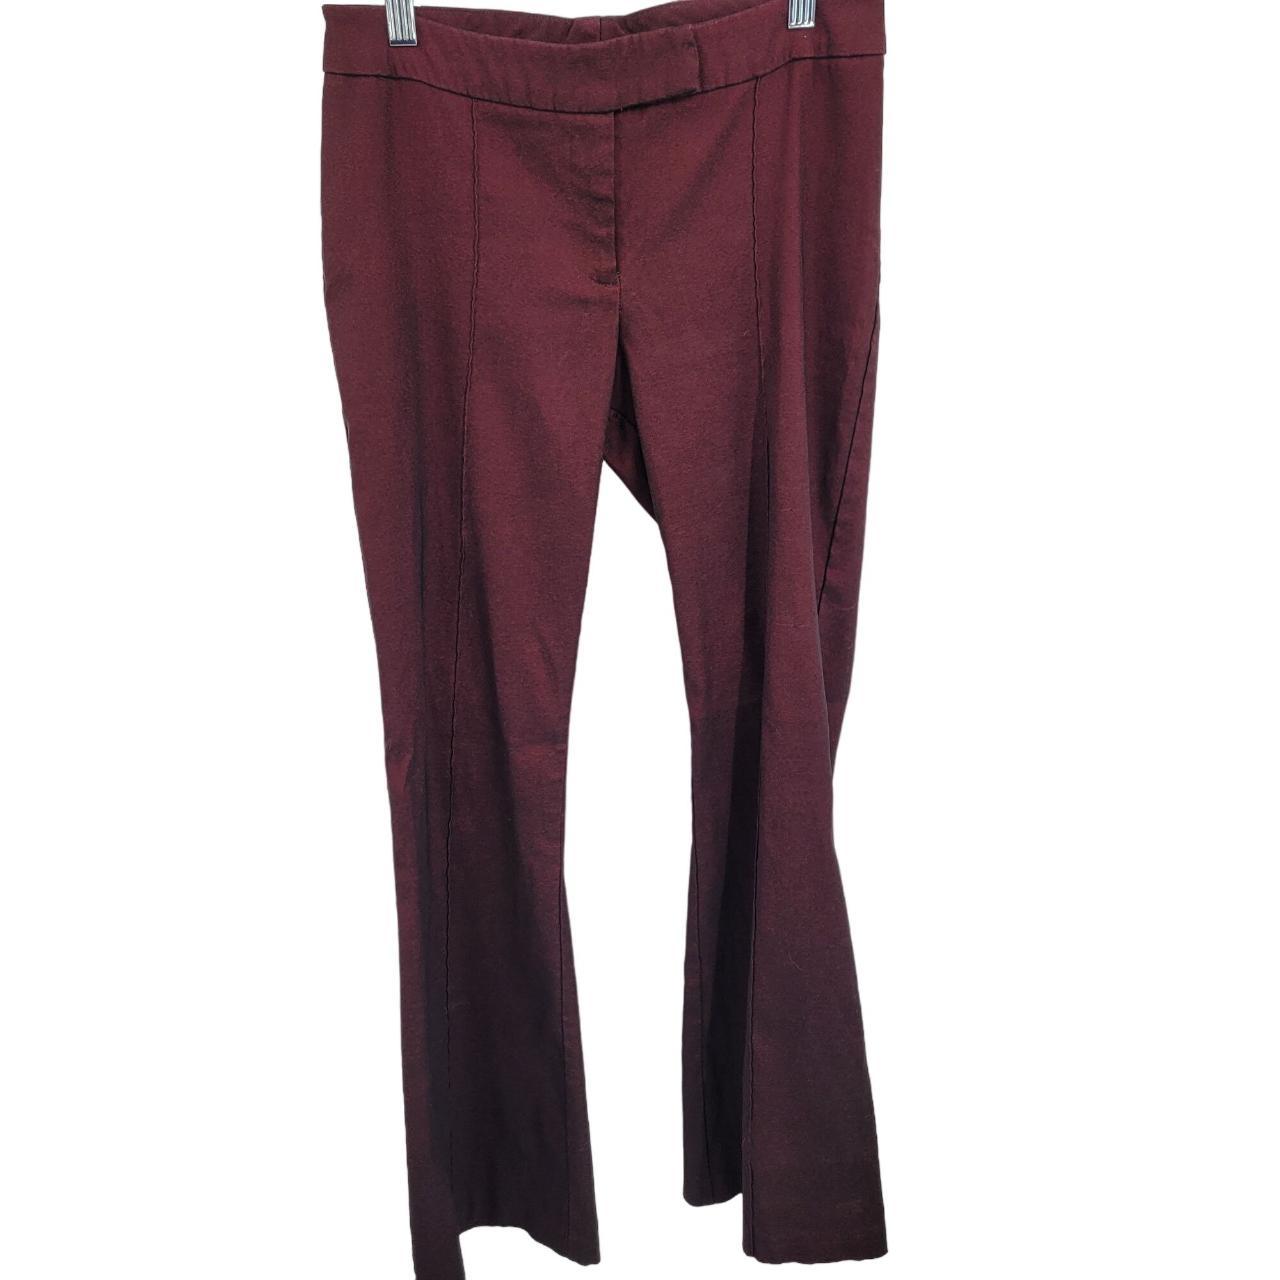 Women's Burgundy Pants